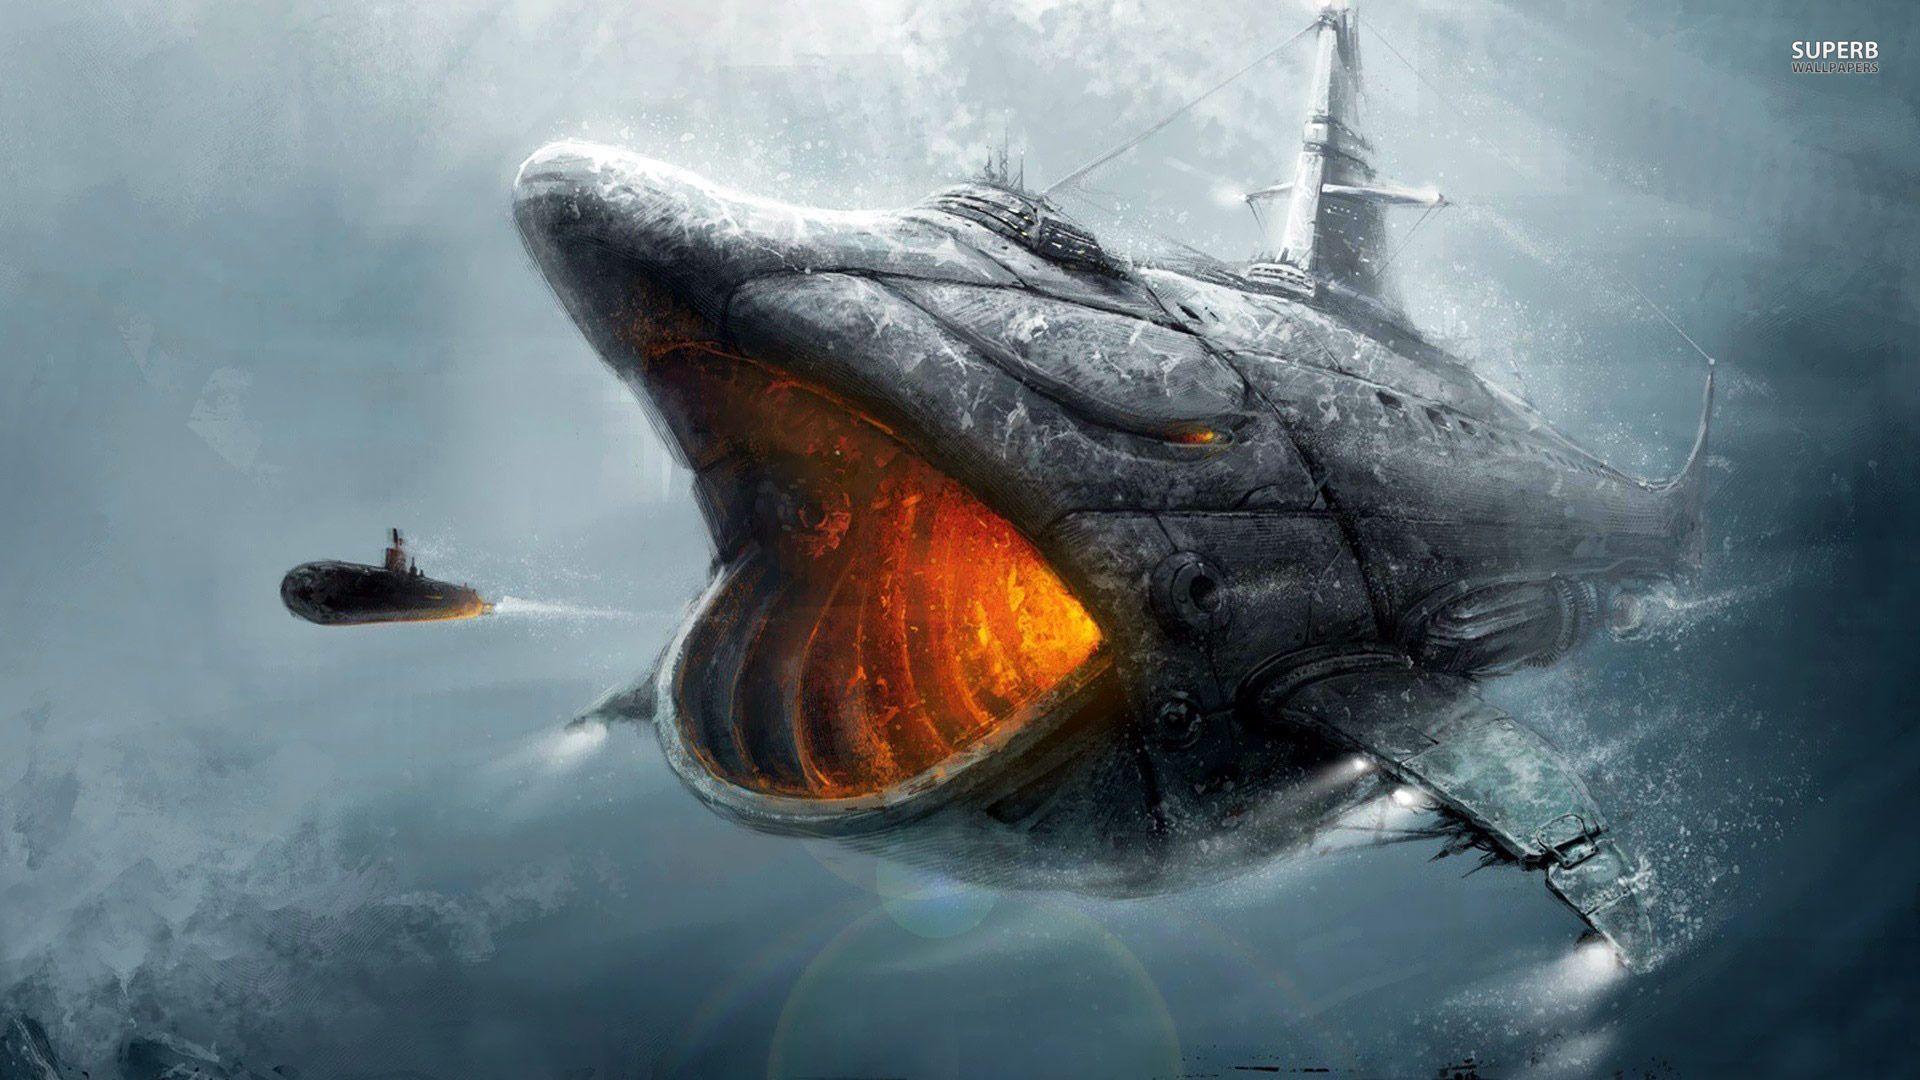 Shark of Darkness: Submarine Returns explores the legend